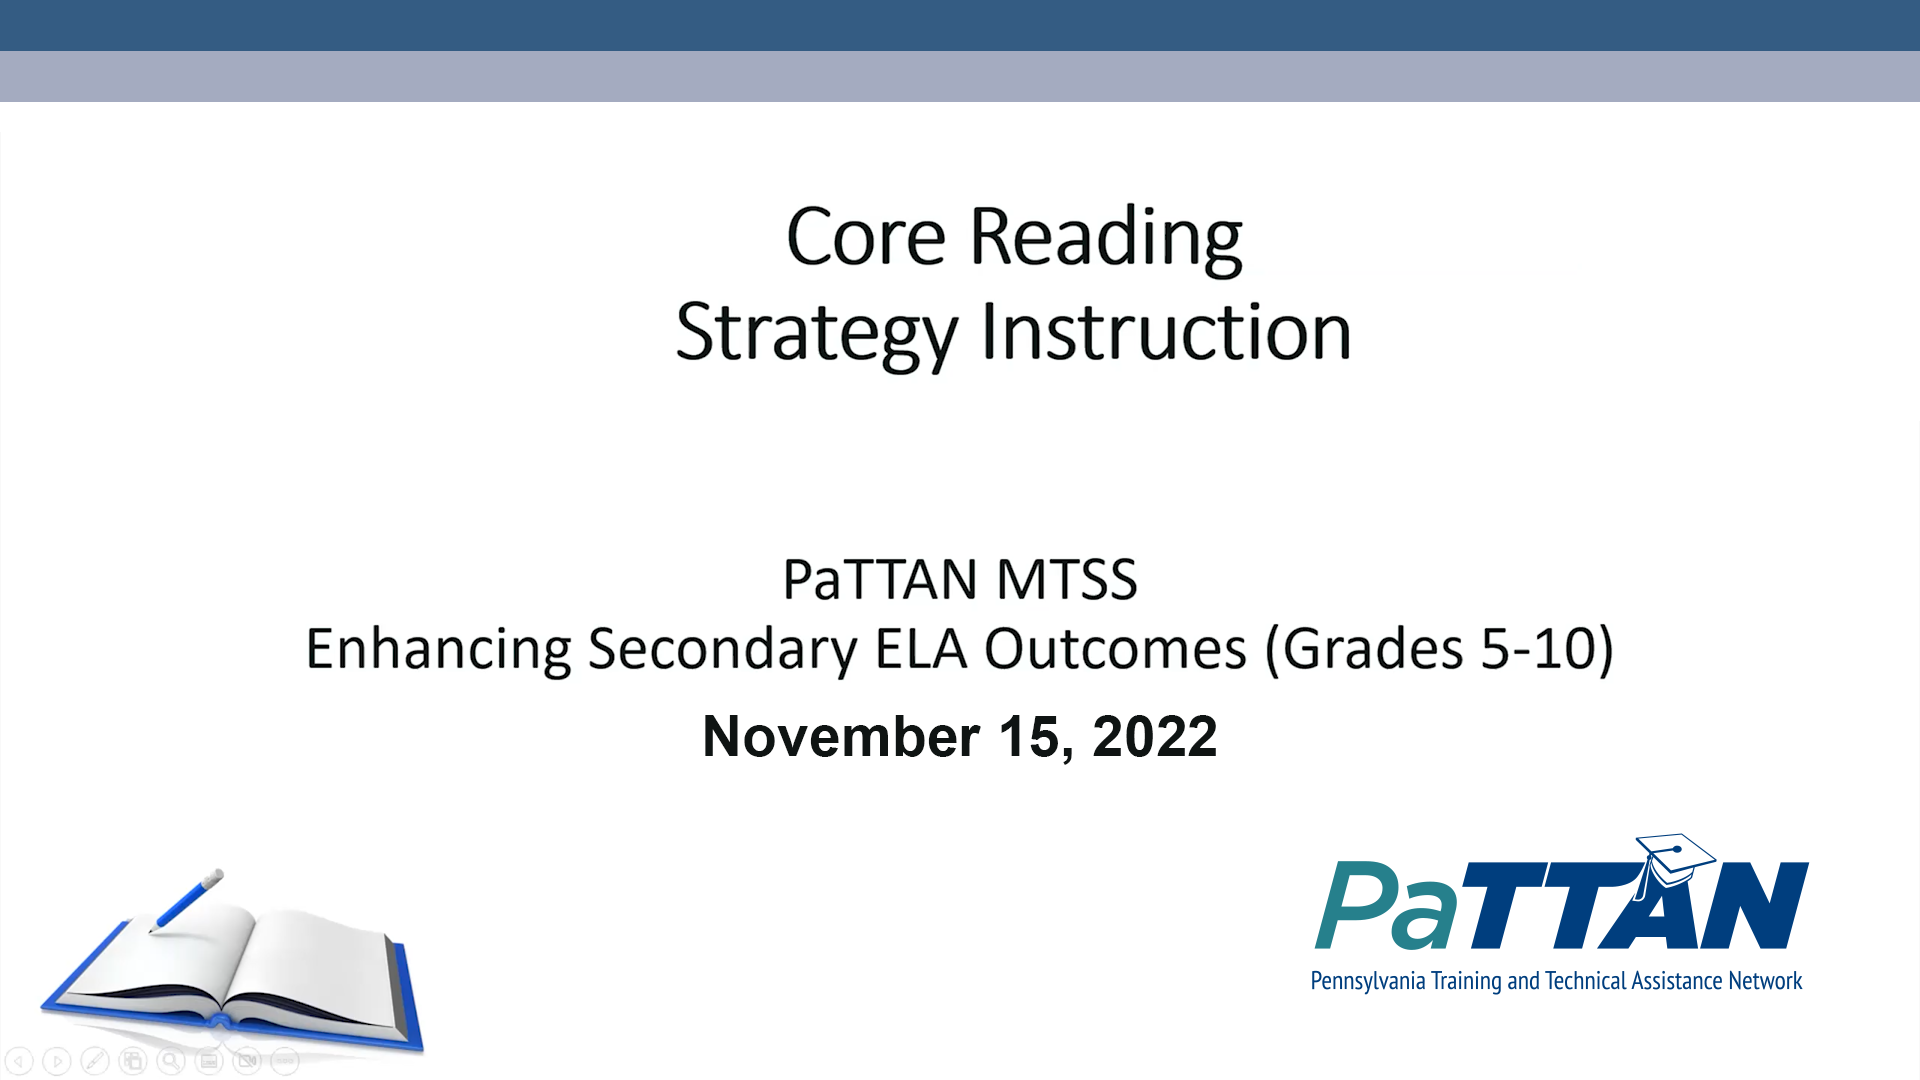 Secondary Core Reading Strategy Instruction (November 15,2022)